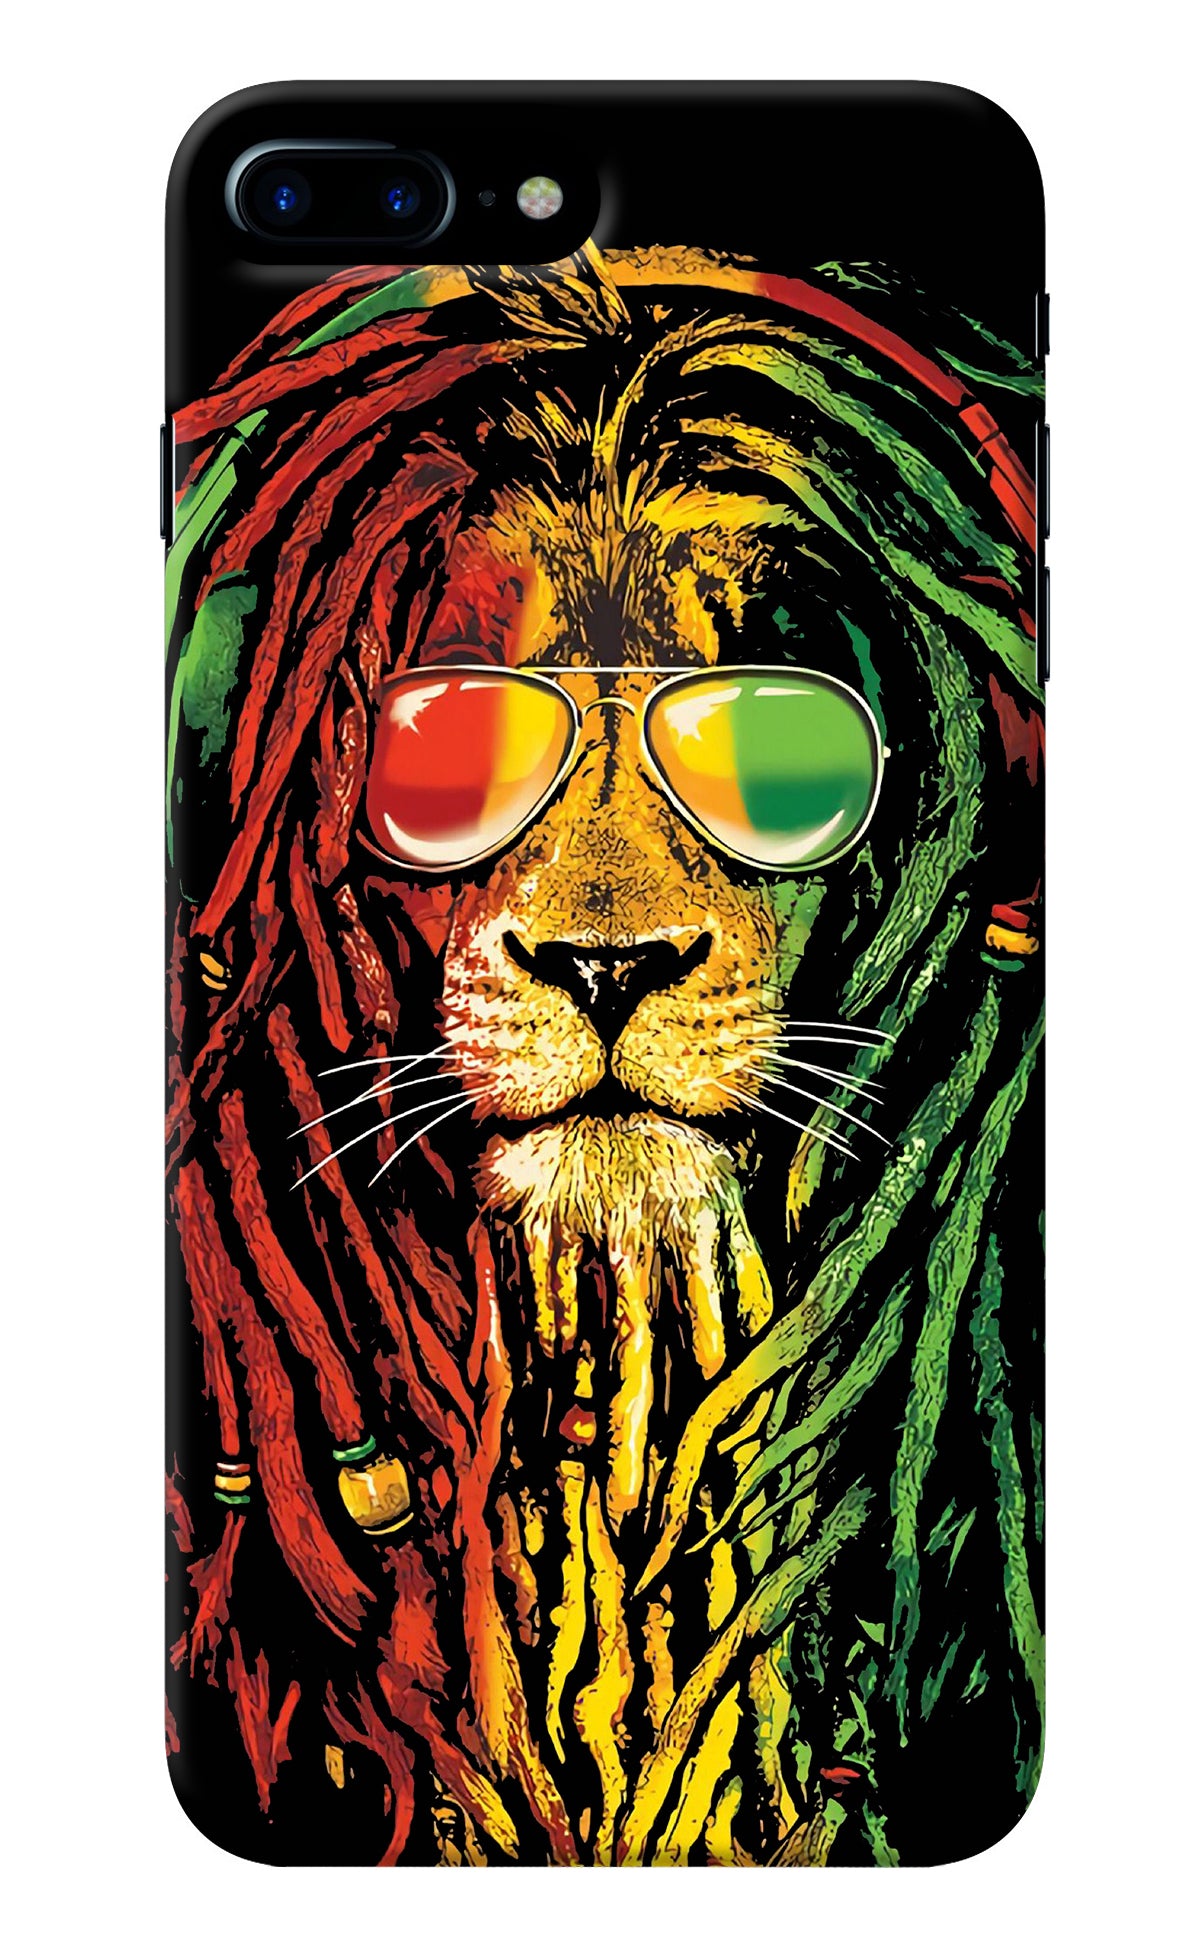 Rasta Lion iPhone 7 Plus Back Cover